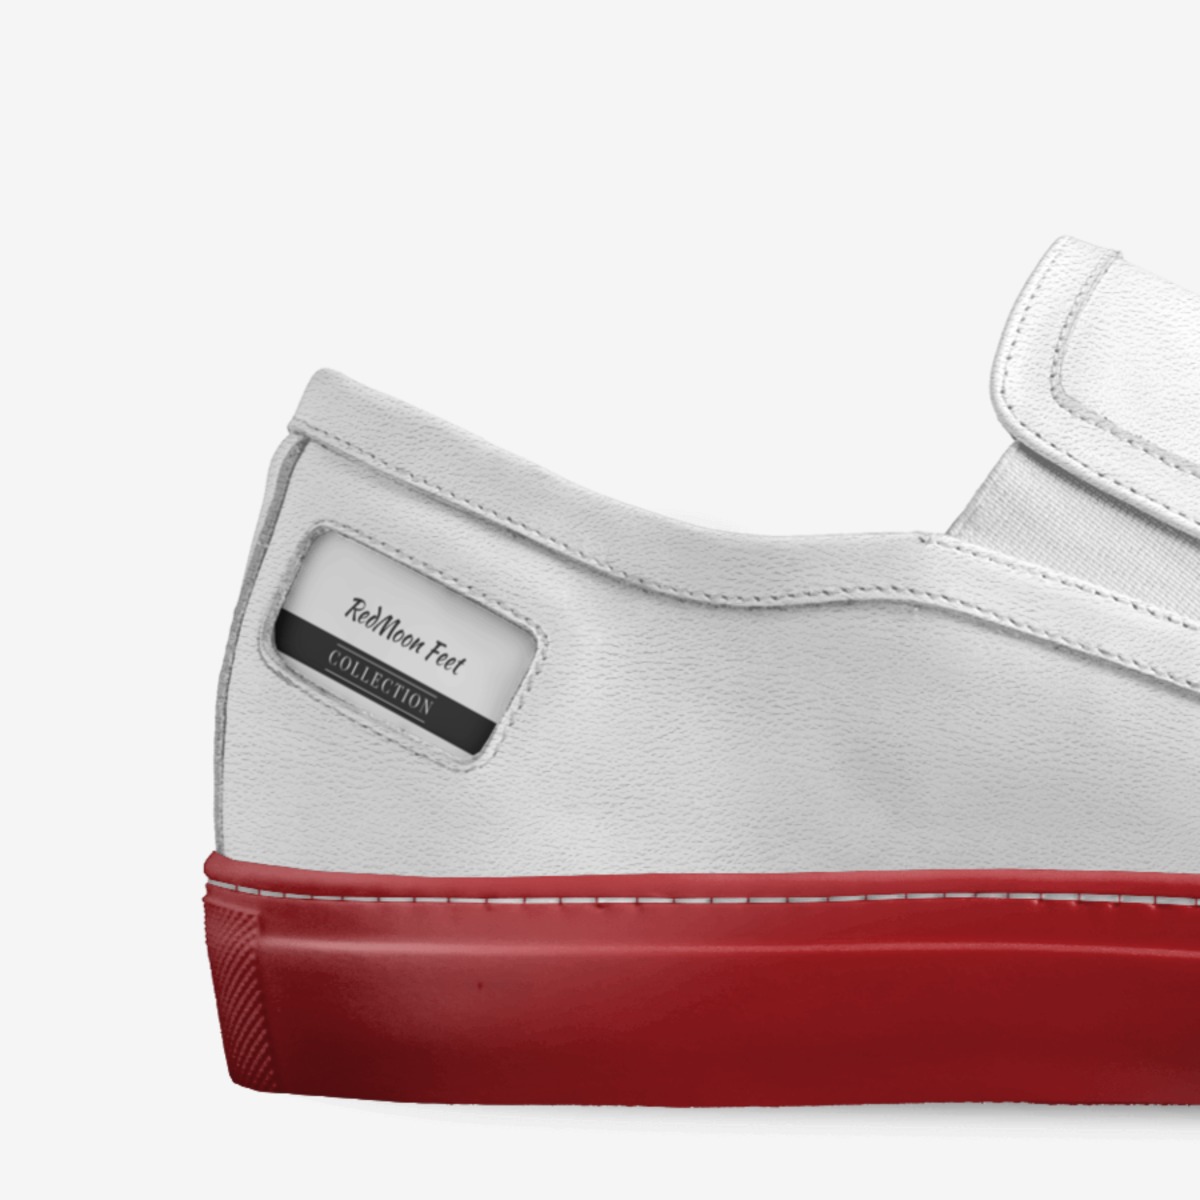 RedMoon Feet | A Custom Shoe concept by Xemnas Portman